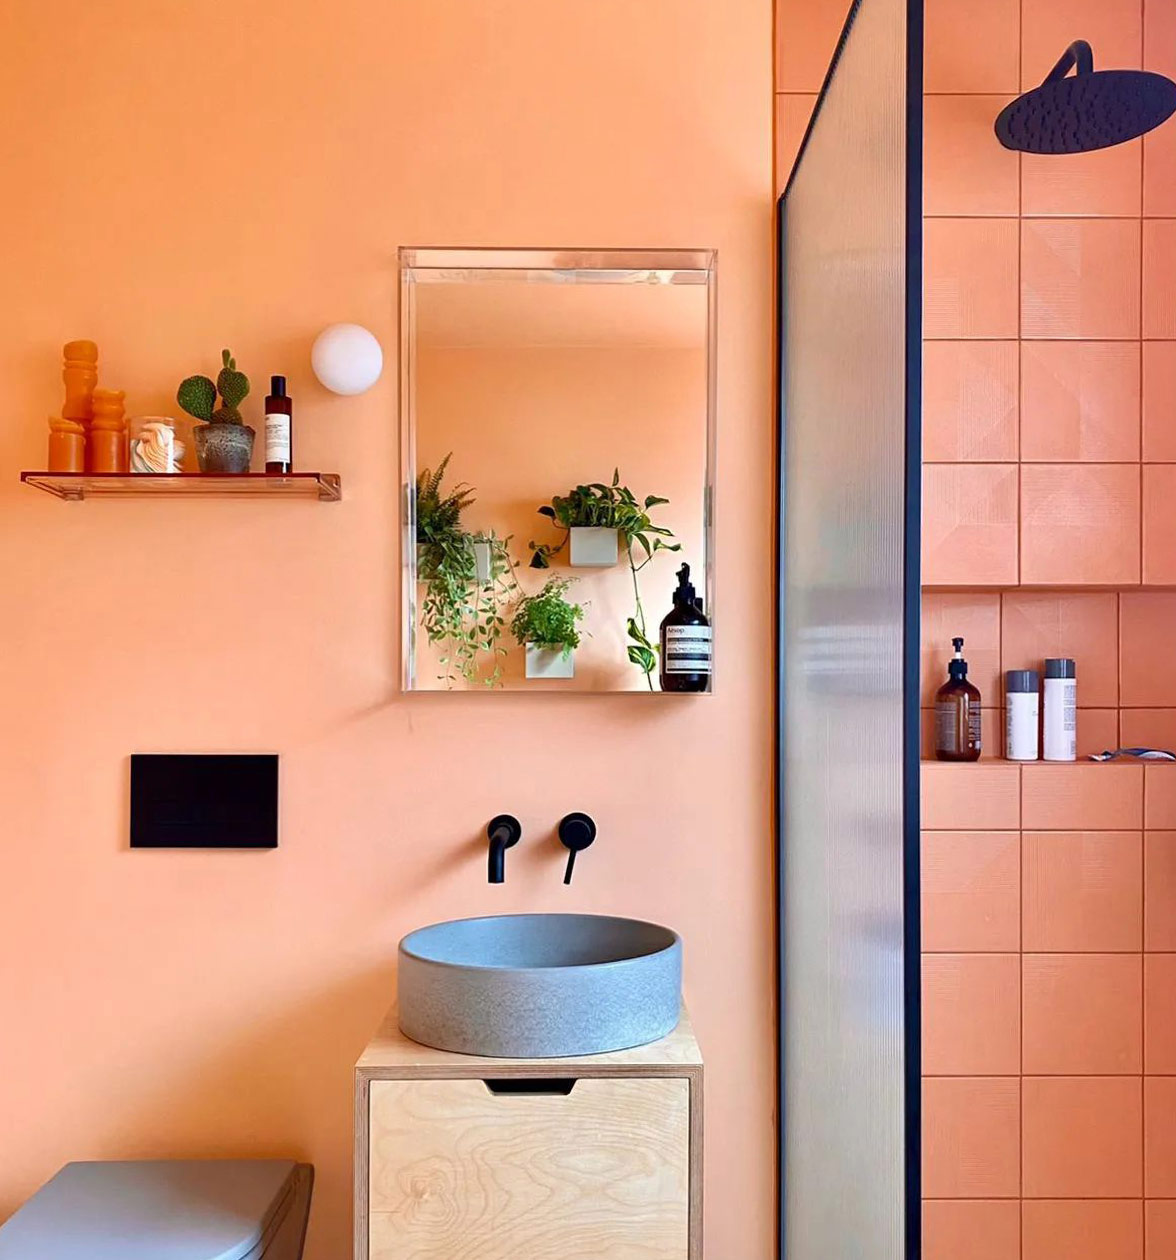 Light orange bathroom with mirror and small plants